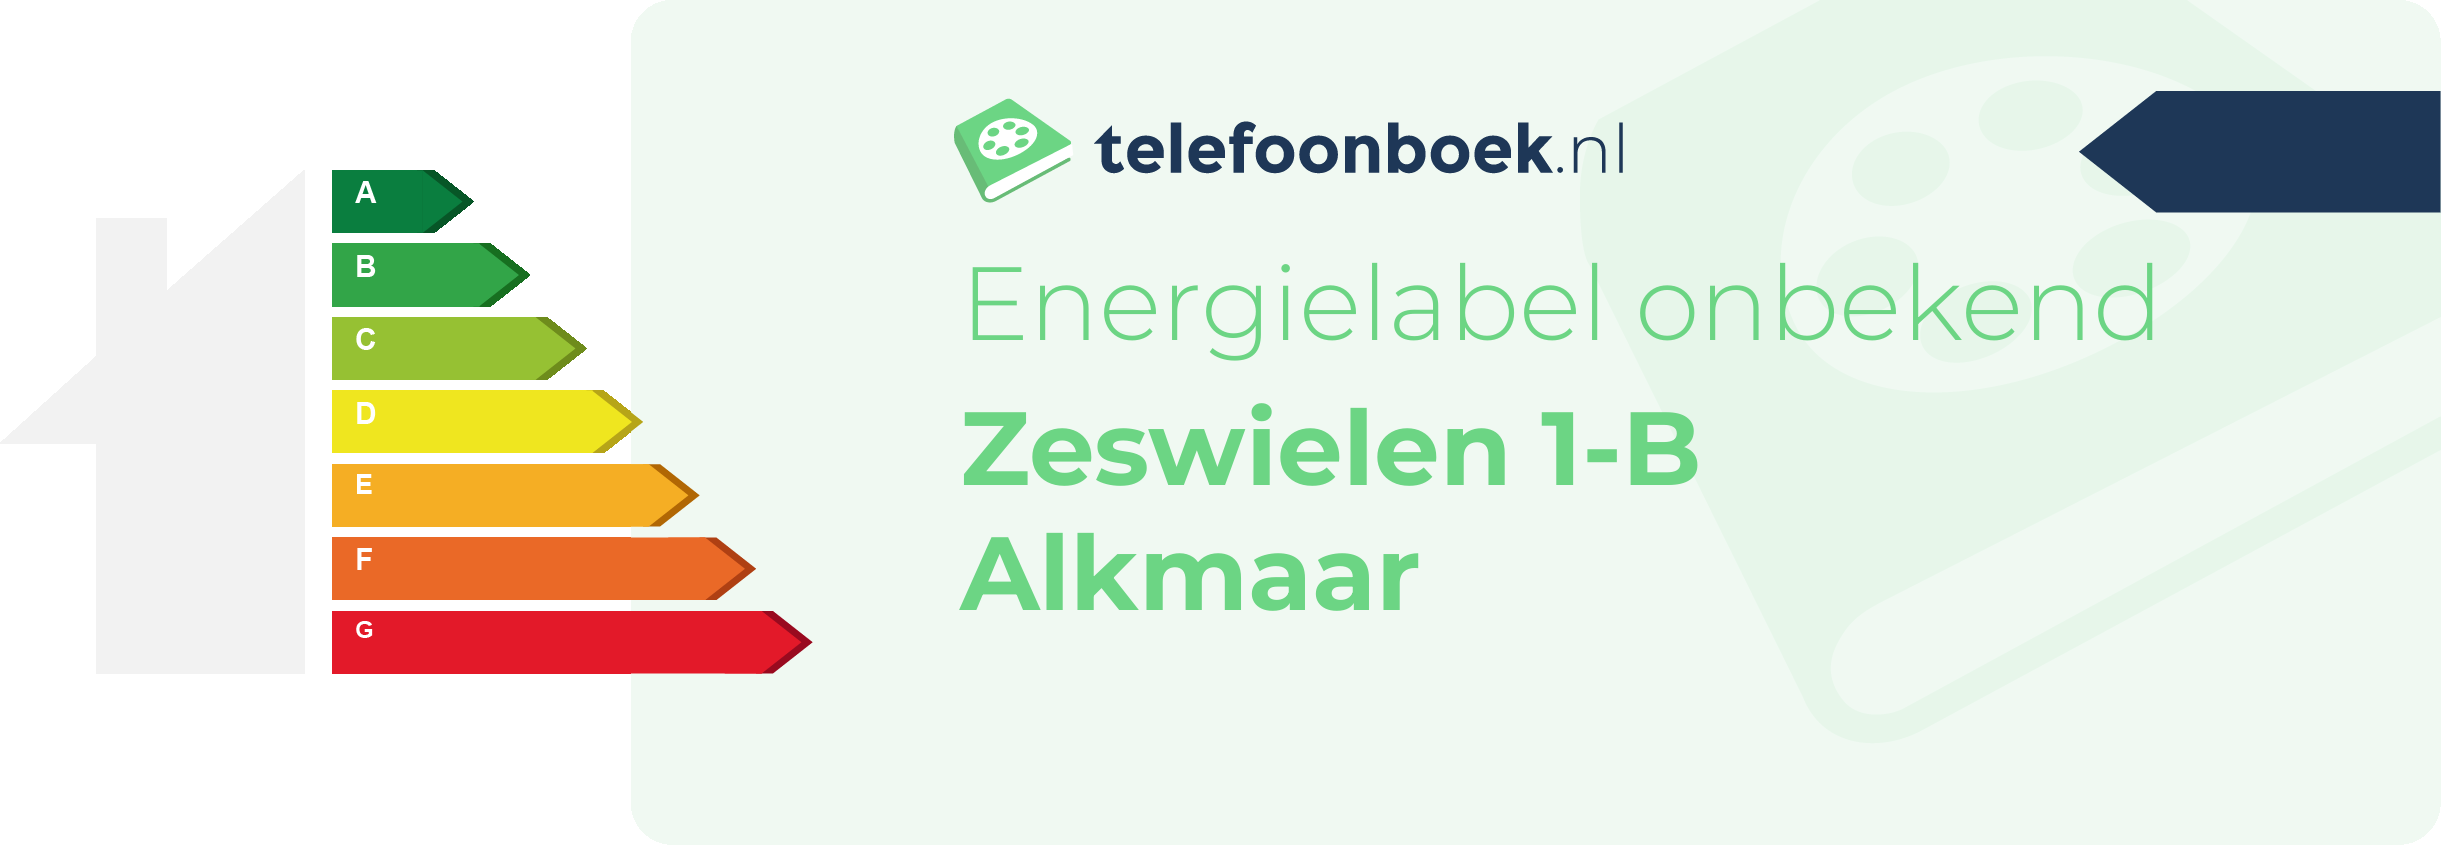 Energielabel Zeswielen 1-B Alkmaar